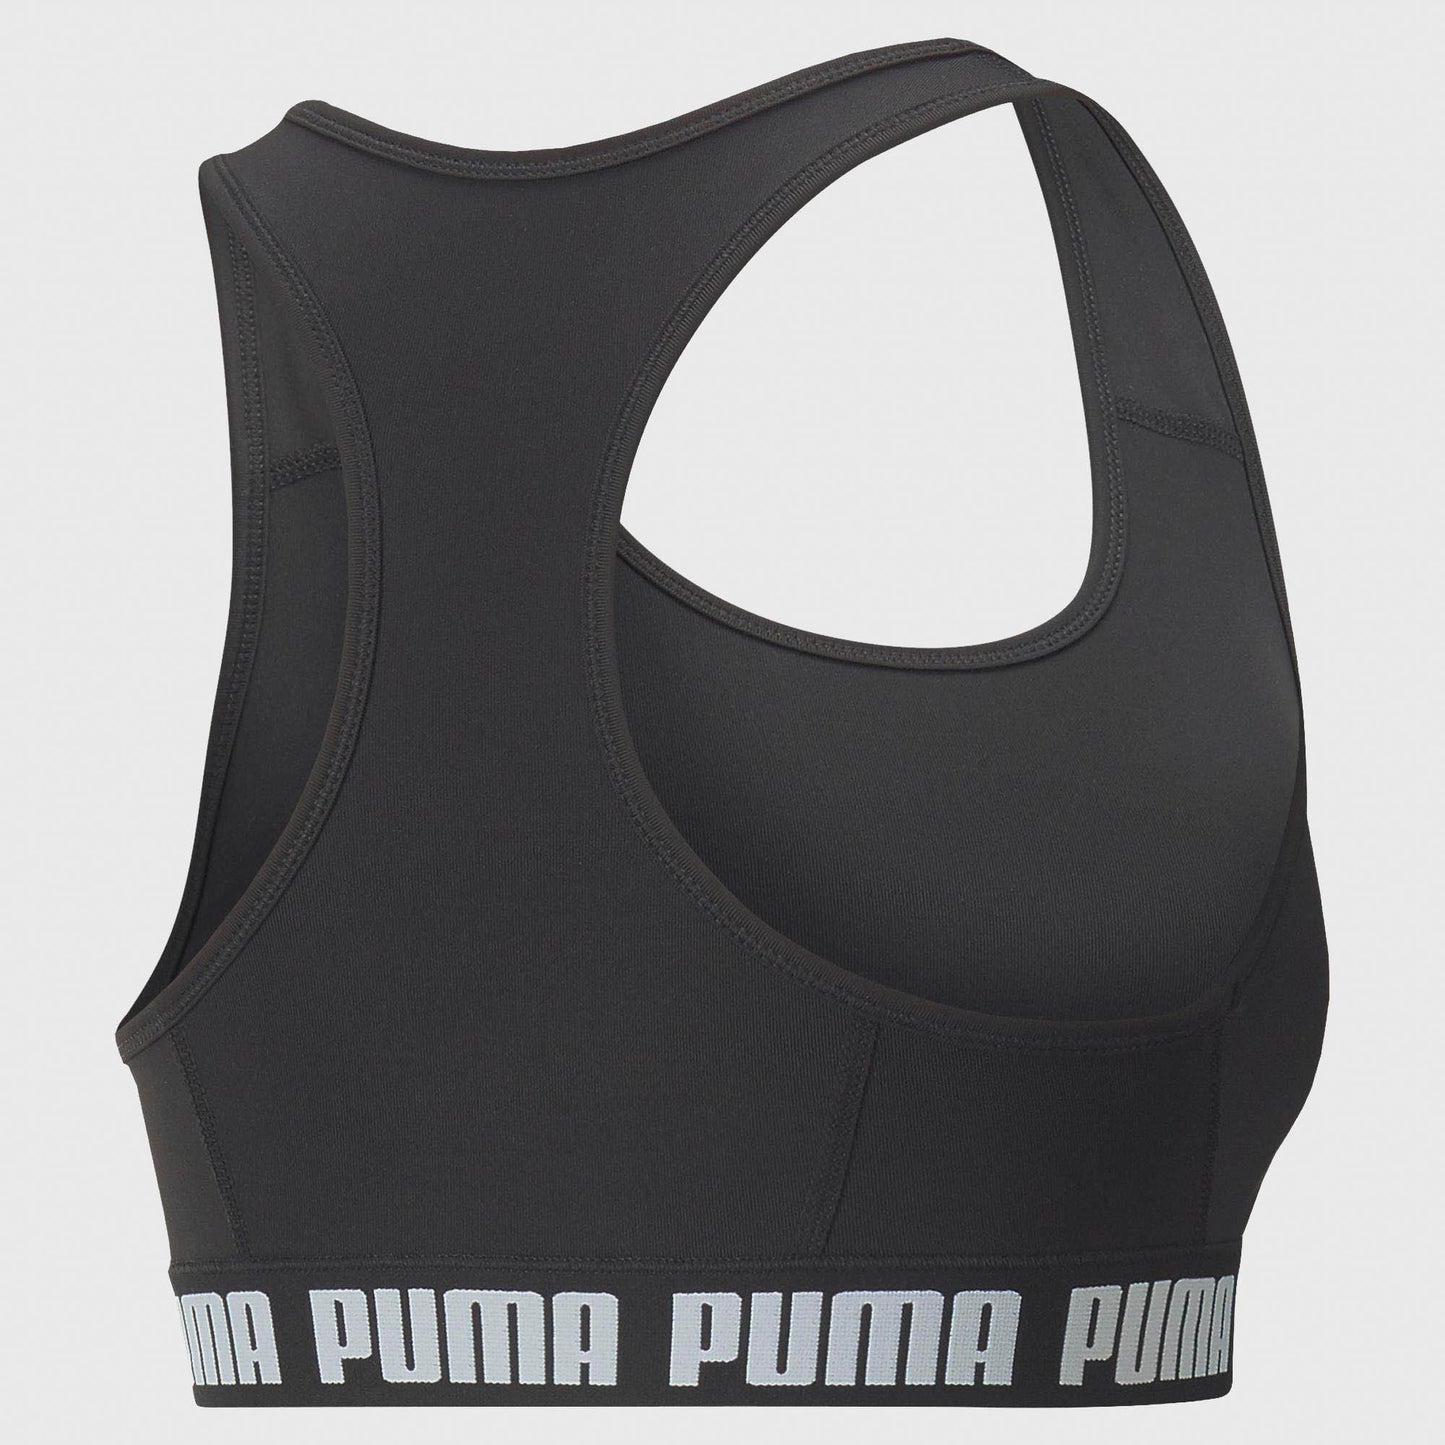 Puma Women's Mid Impact Puma Strong Bra